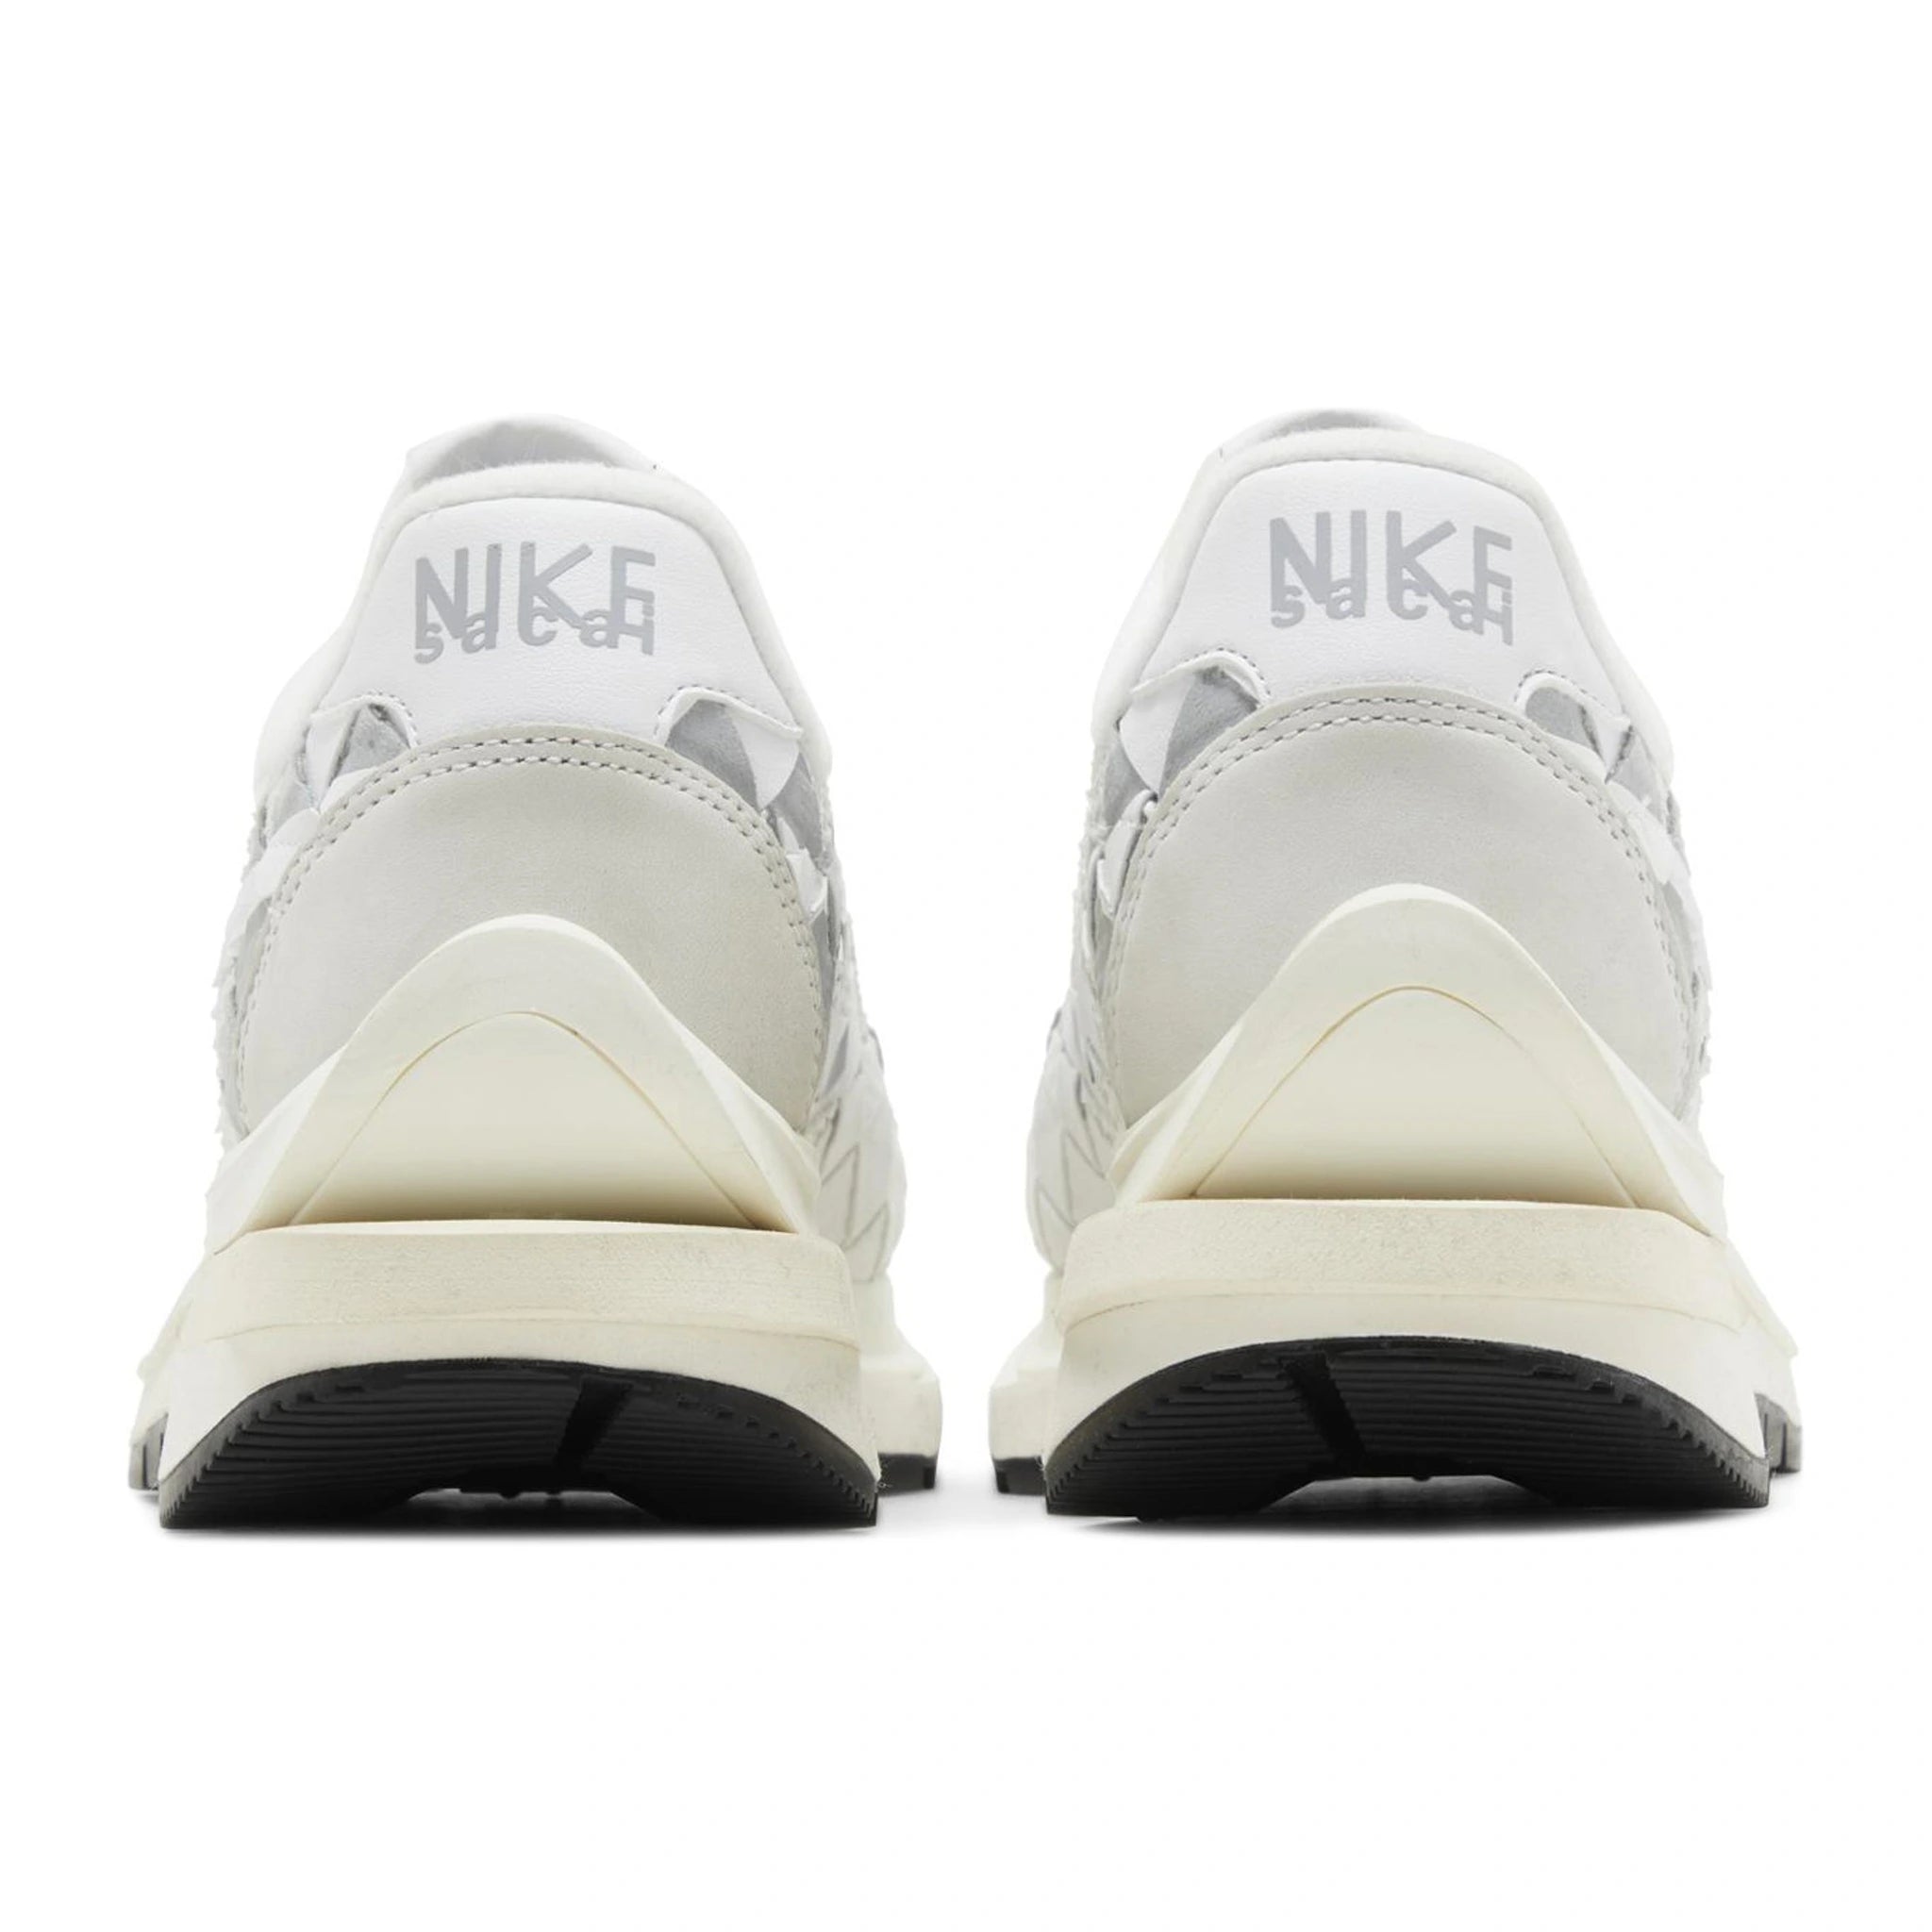 Back view of Nike x Sacai x Jean Paul Gaultier Woven White DR5209-100